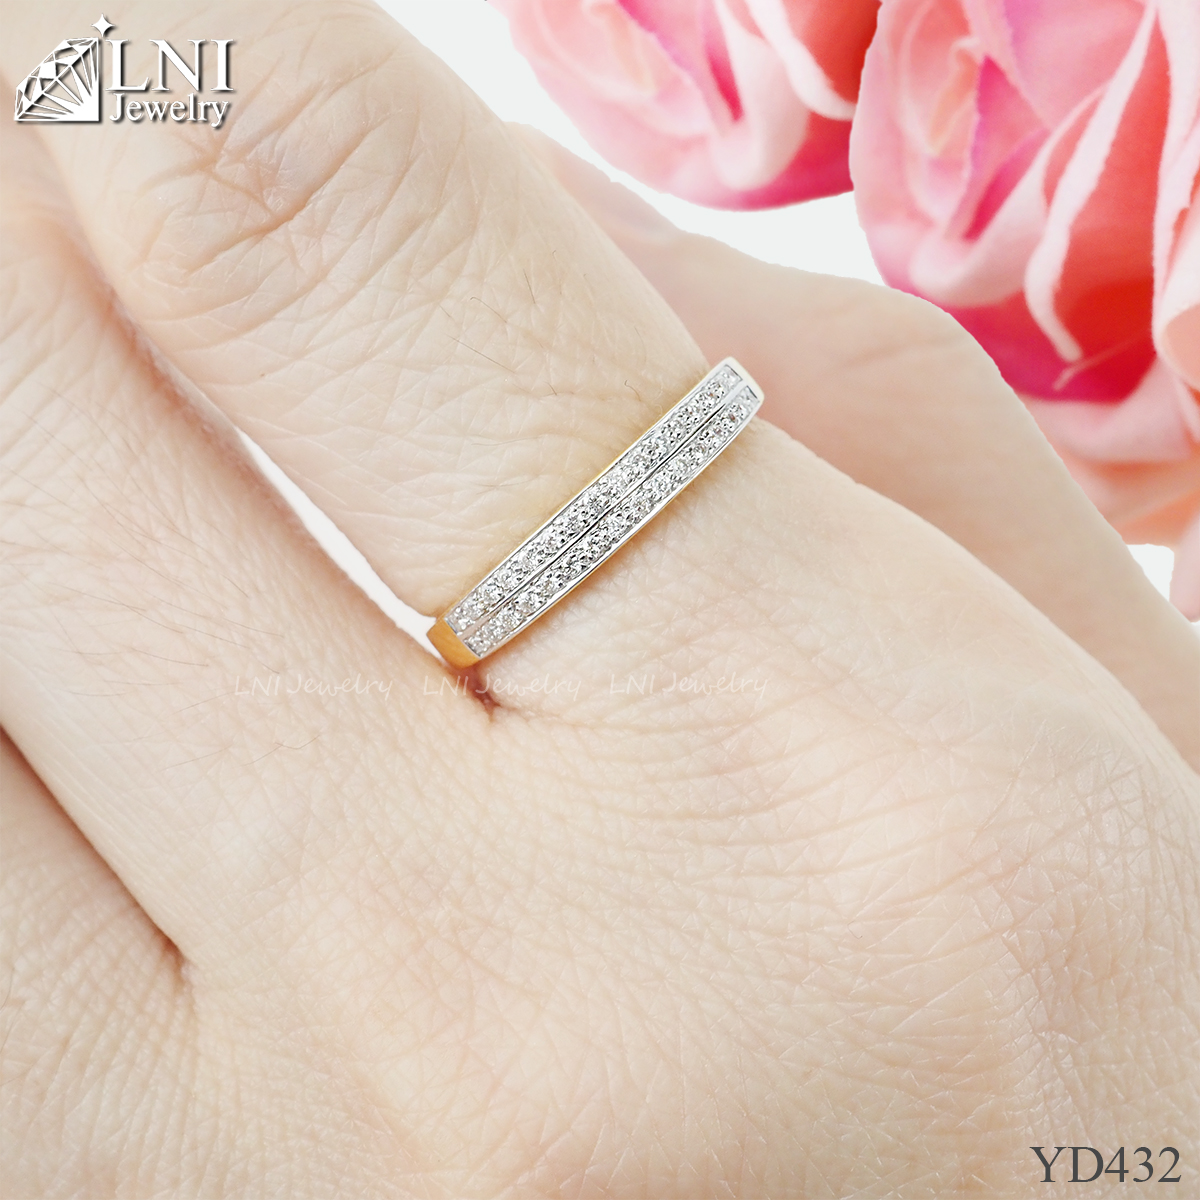 YD432 Band Diamond Ring